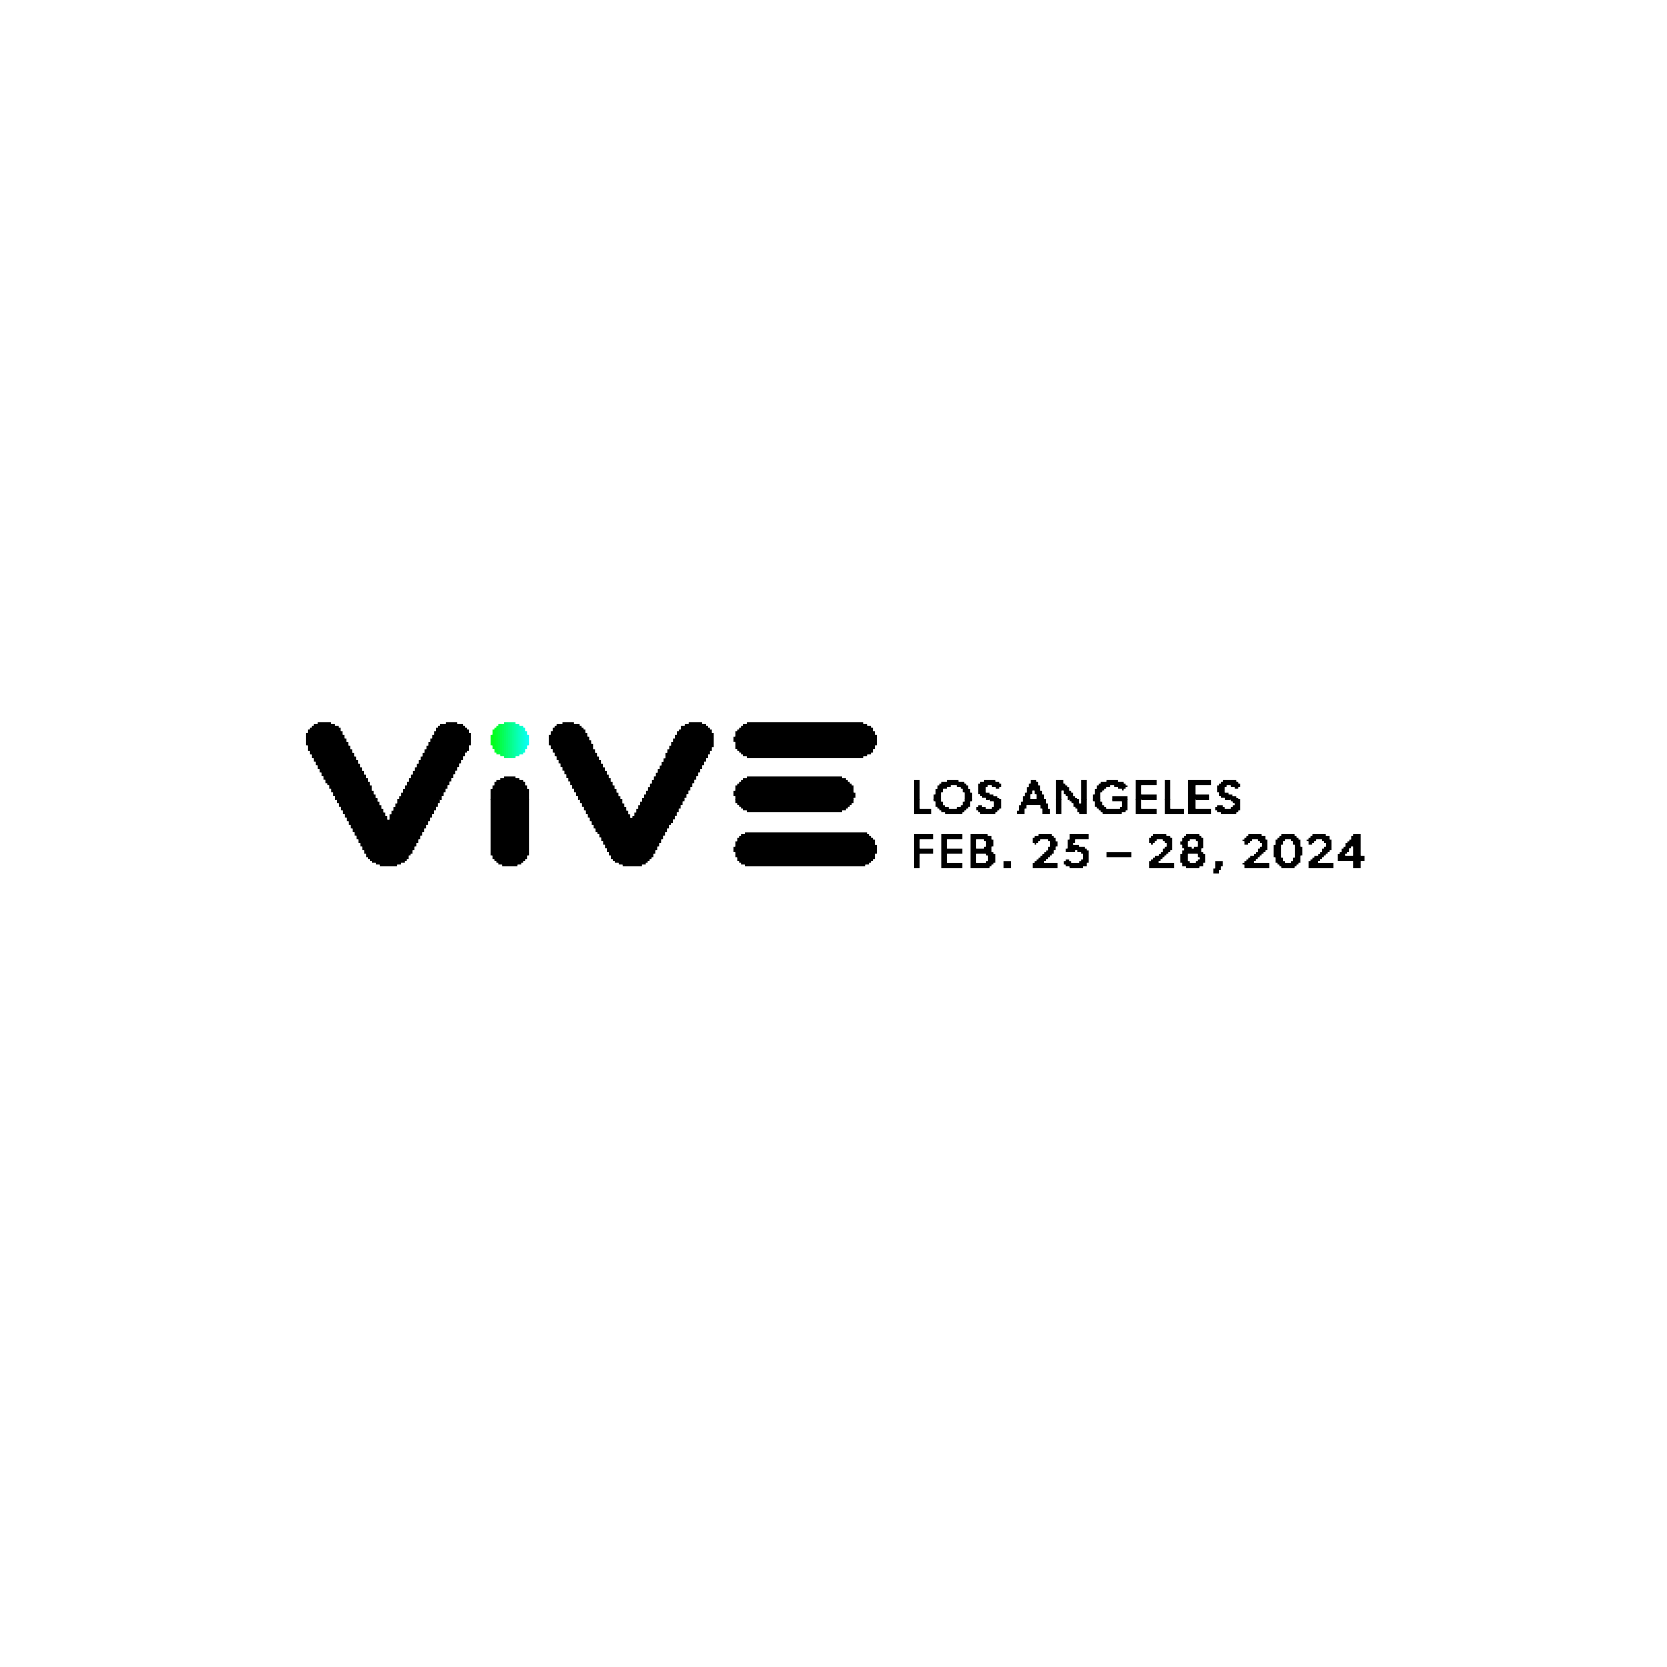 ViVE 2024 Los Angeles Convention Center